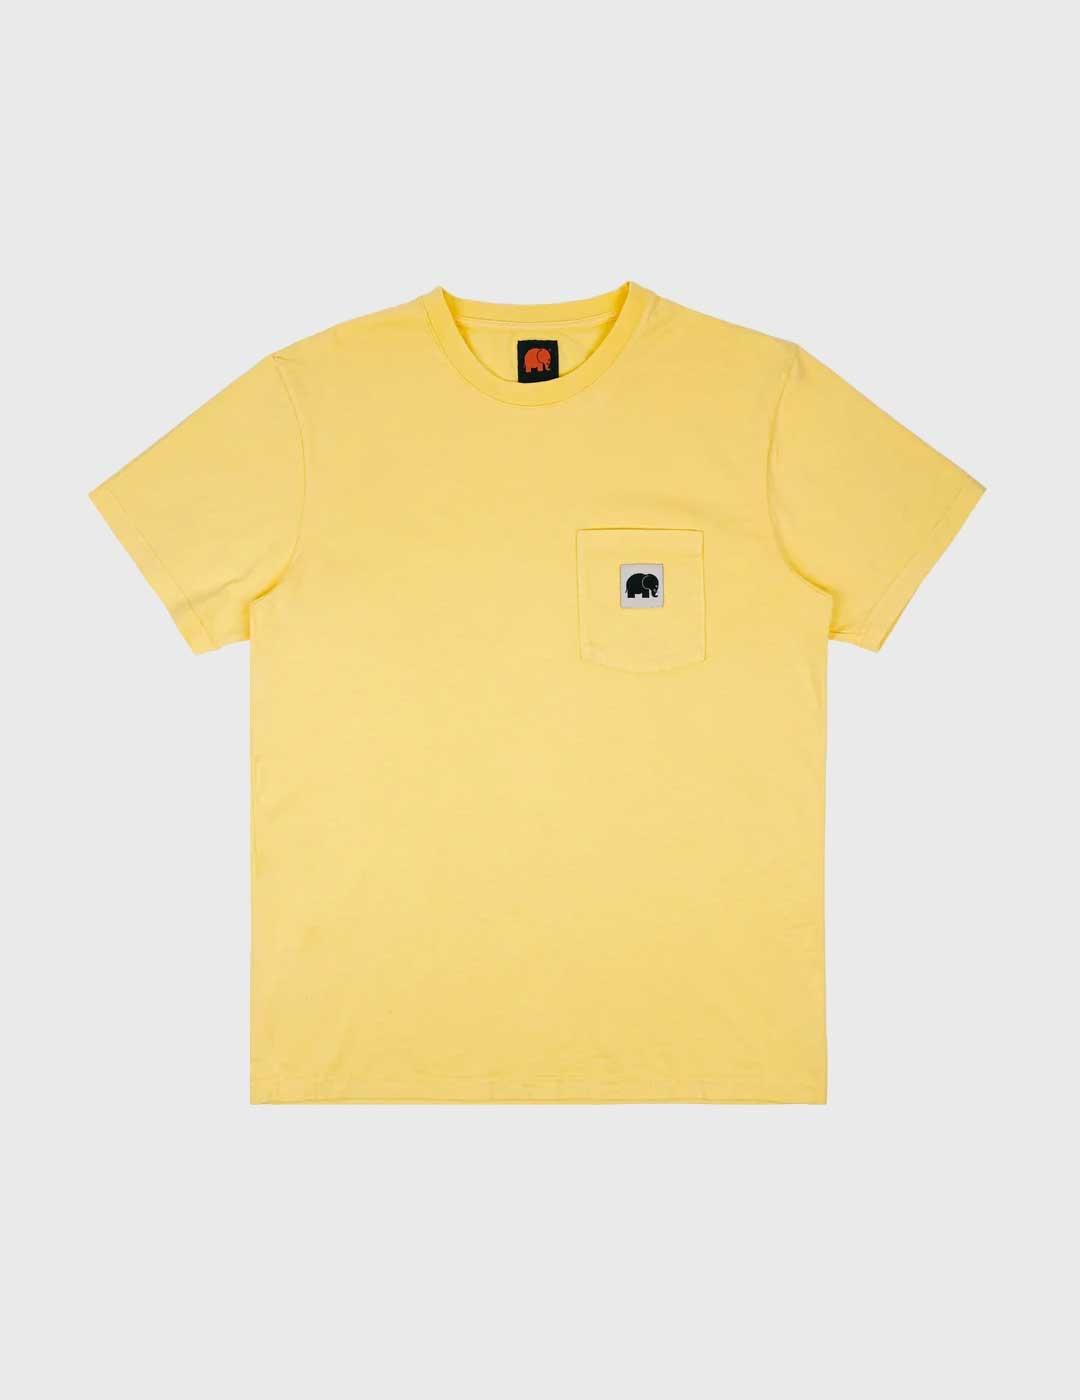 Trendsplant Garza T-Shirt Camiseta amarilla para hombre